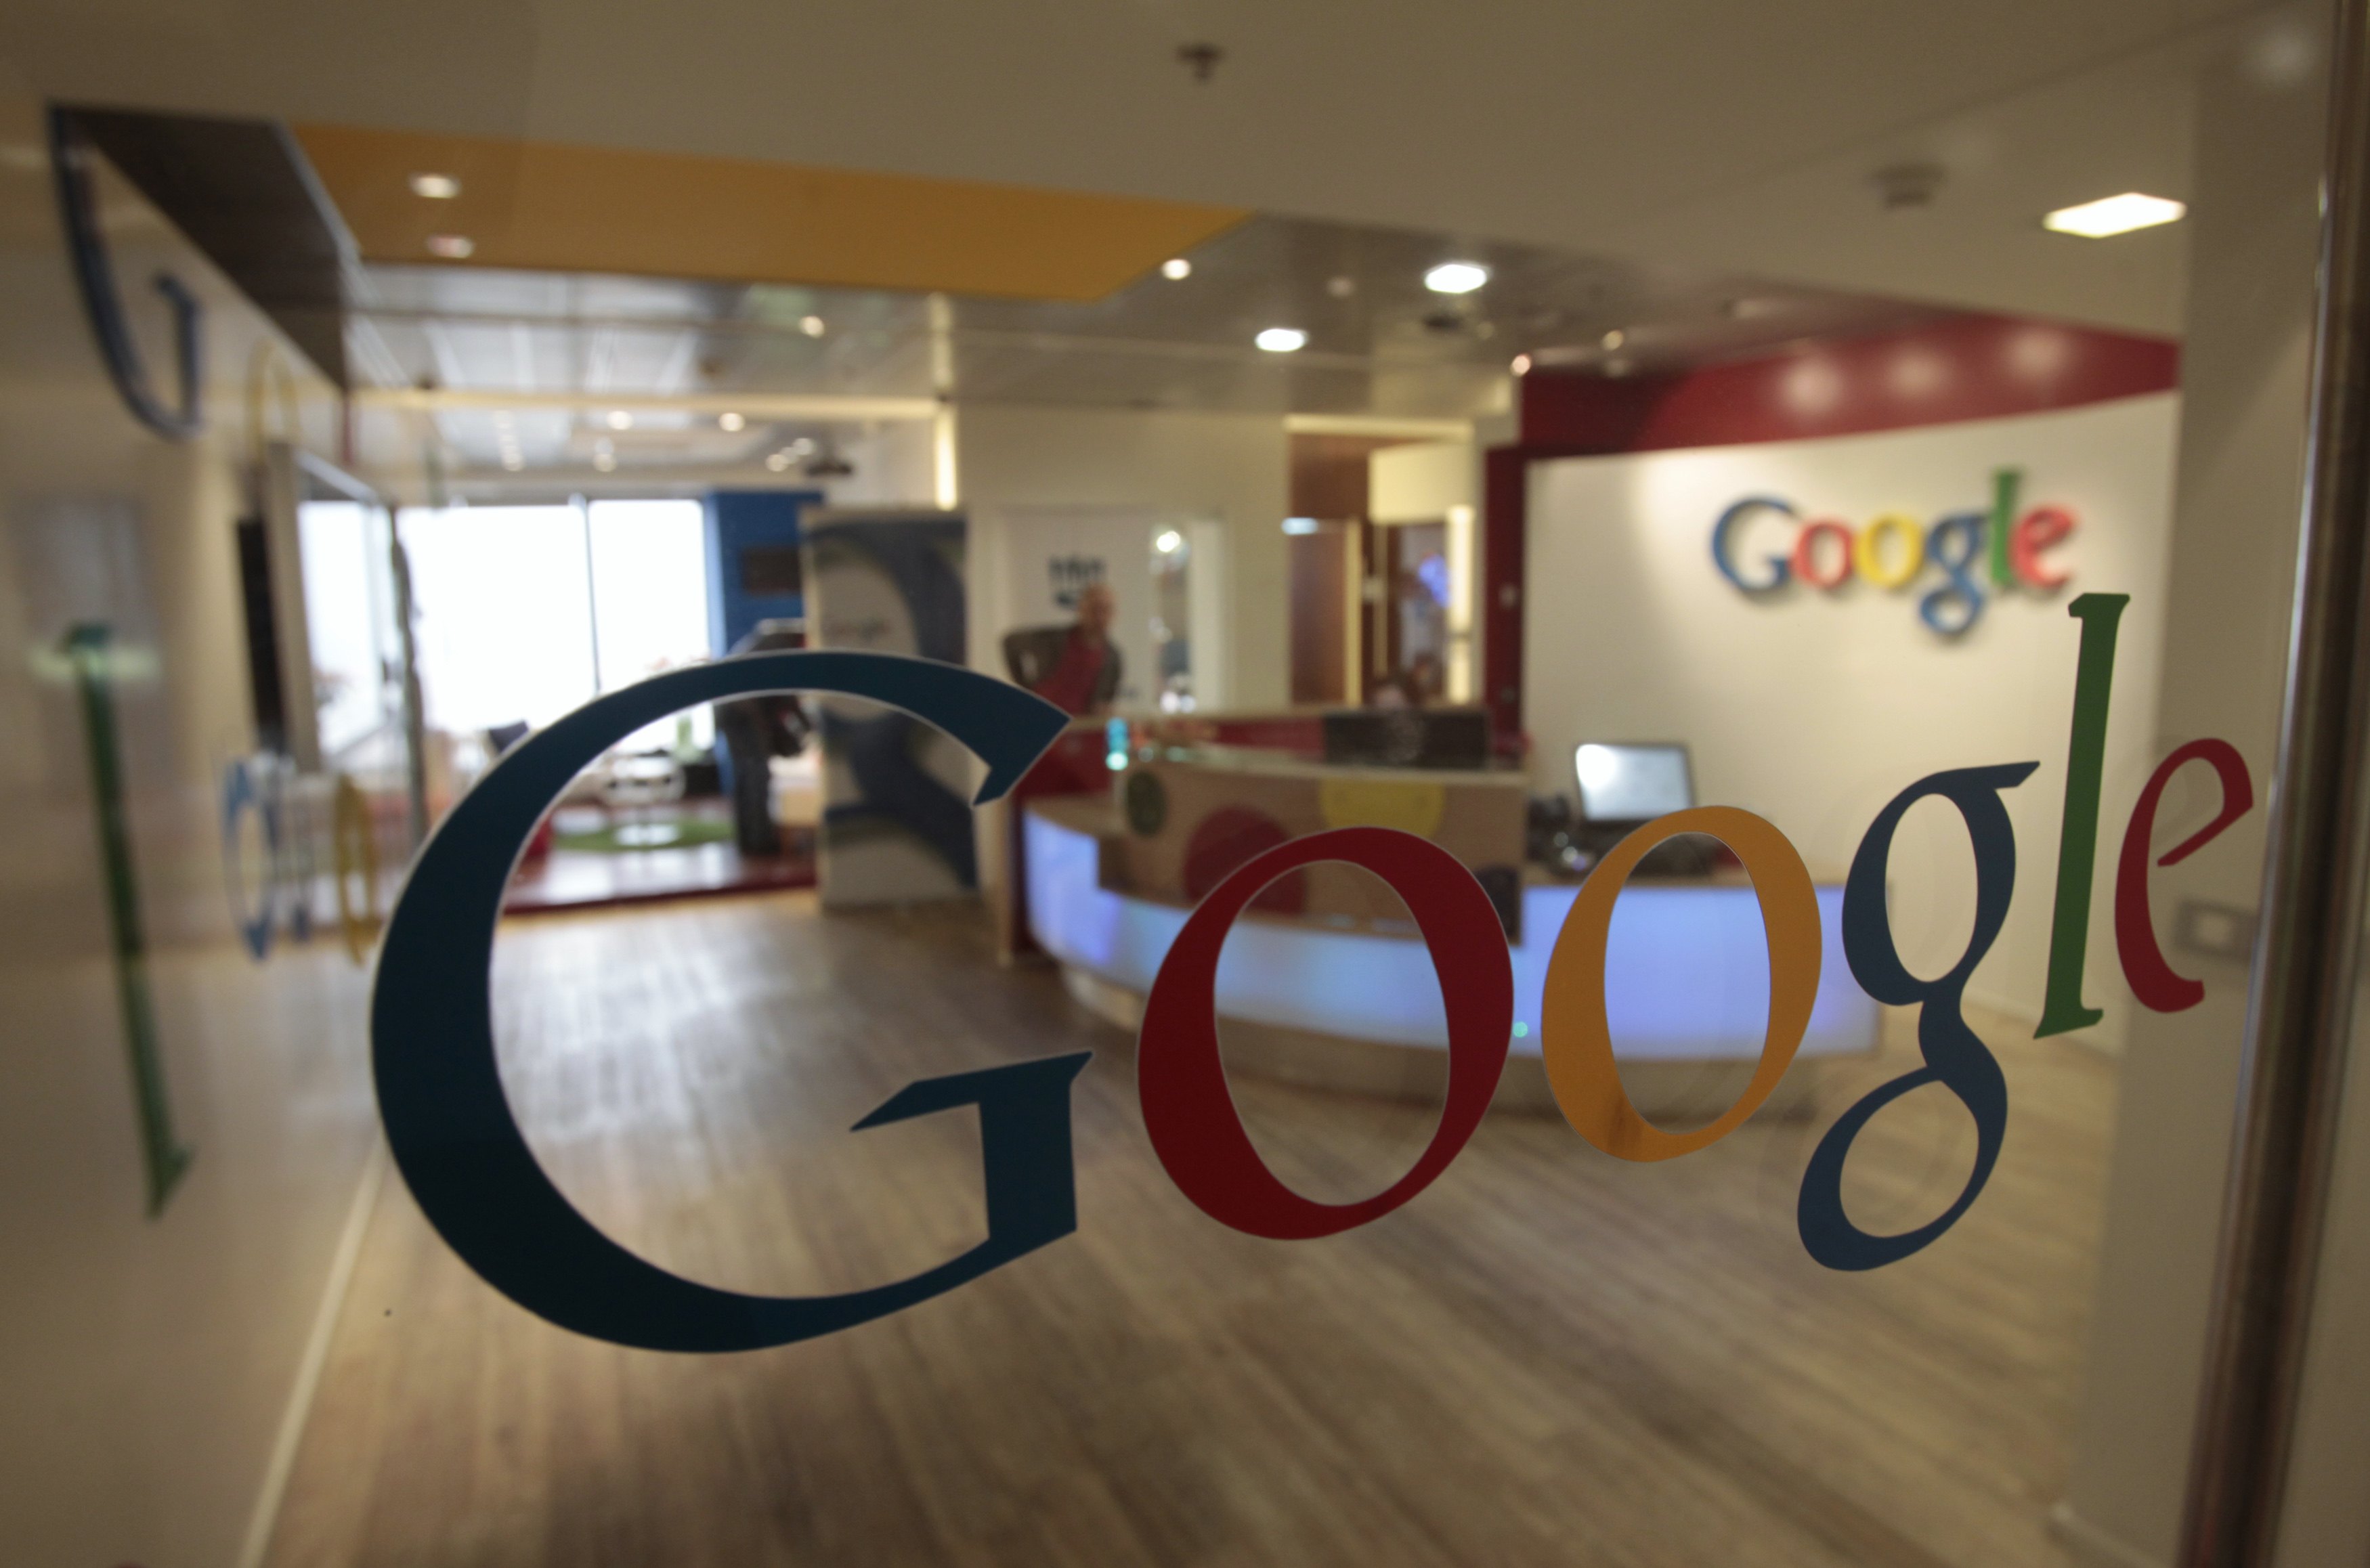 <b>Google</b>Αγνοείται ο υπεύθυνος μάρκετινγκ για Μέση Ανατολή και Βόρεια Αφρική